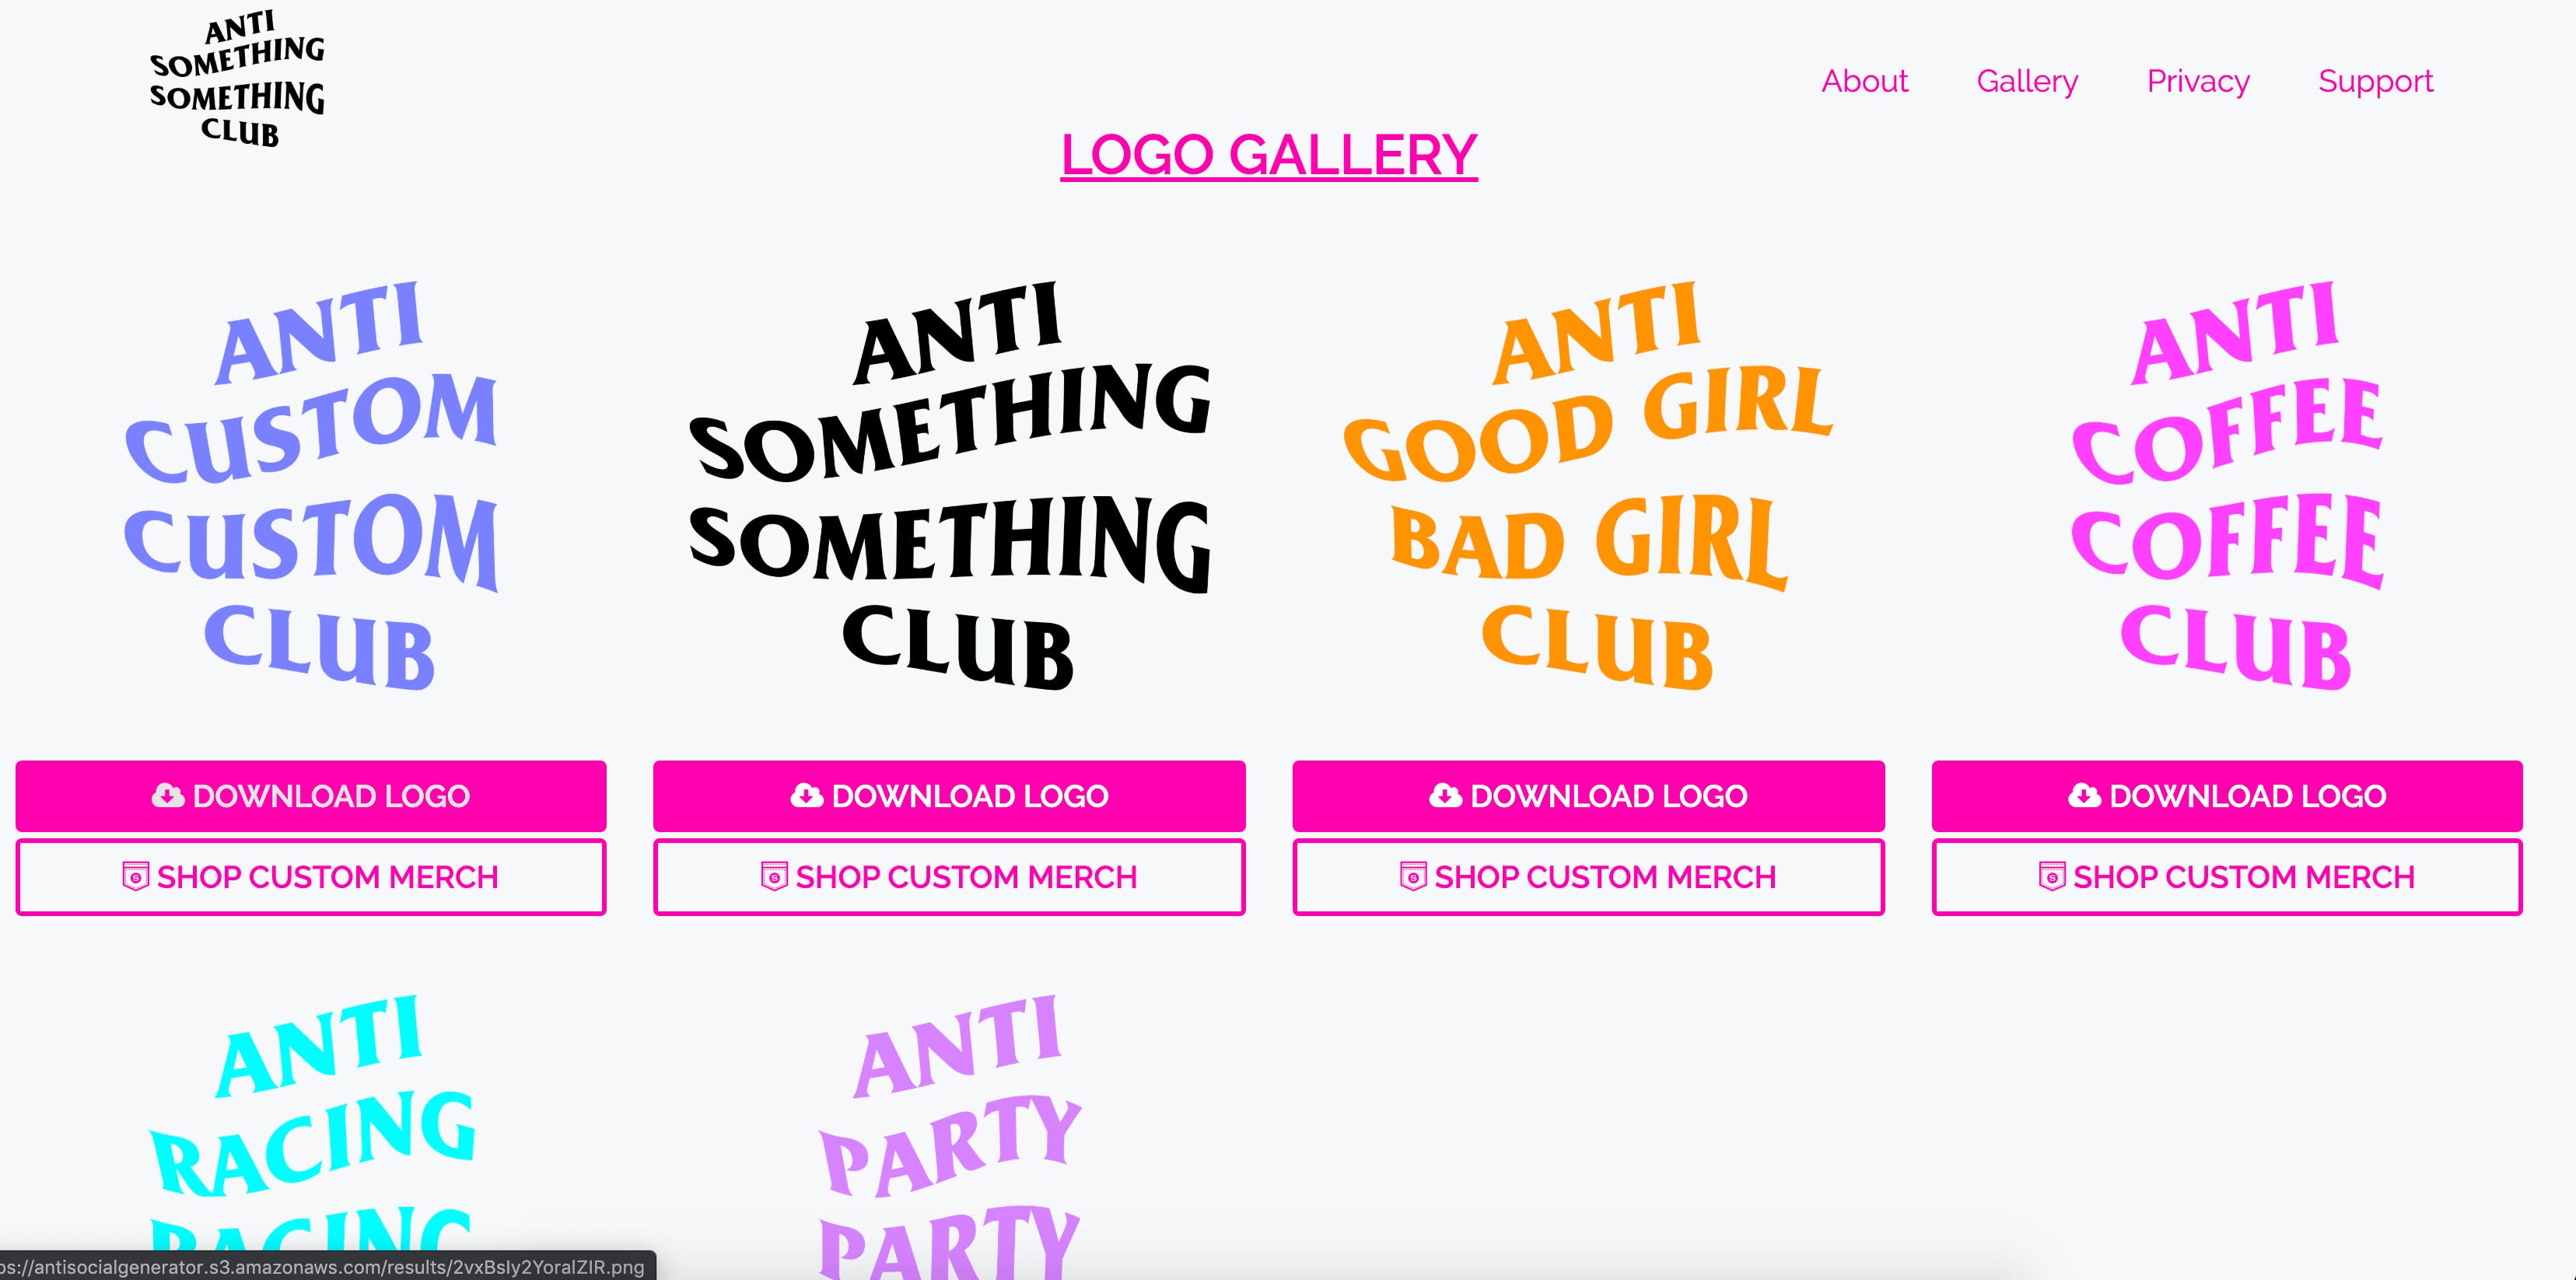 Anti Custom Club - ASSC Logo Generator media 3